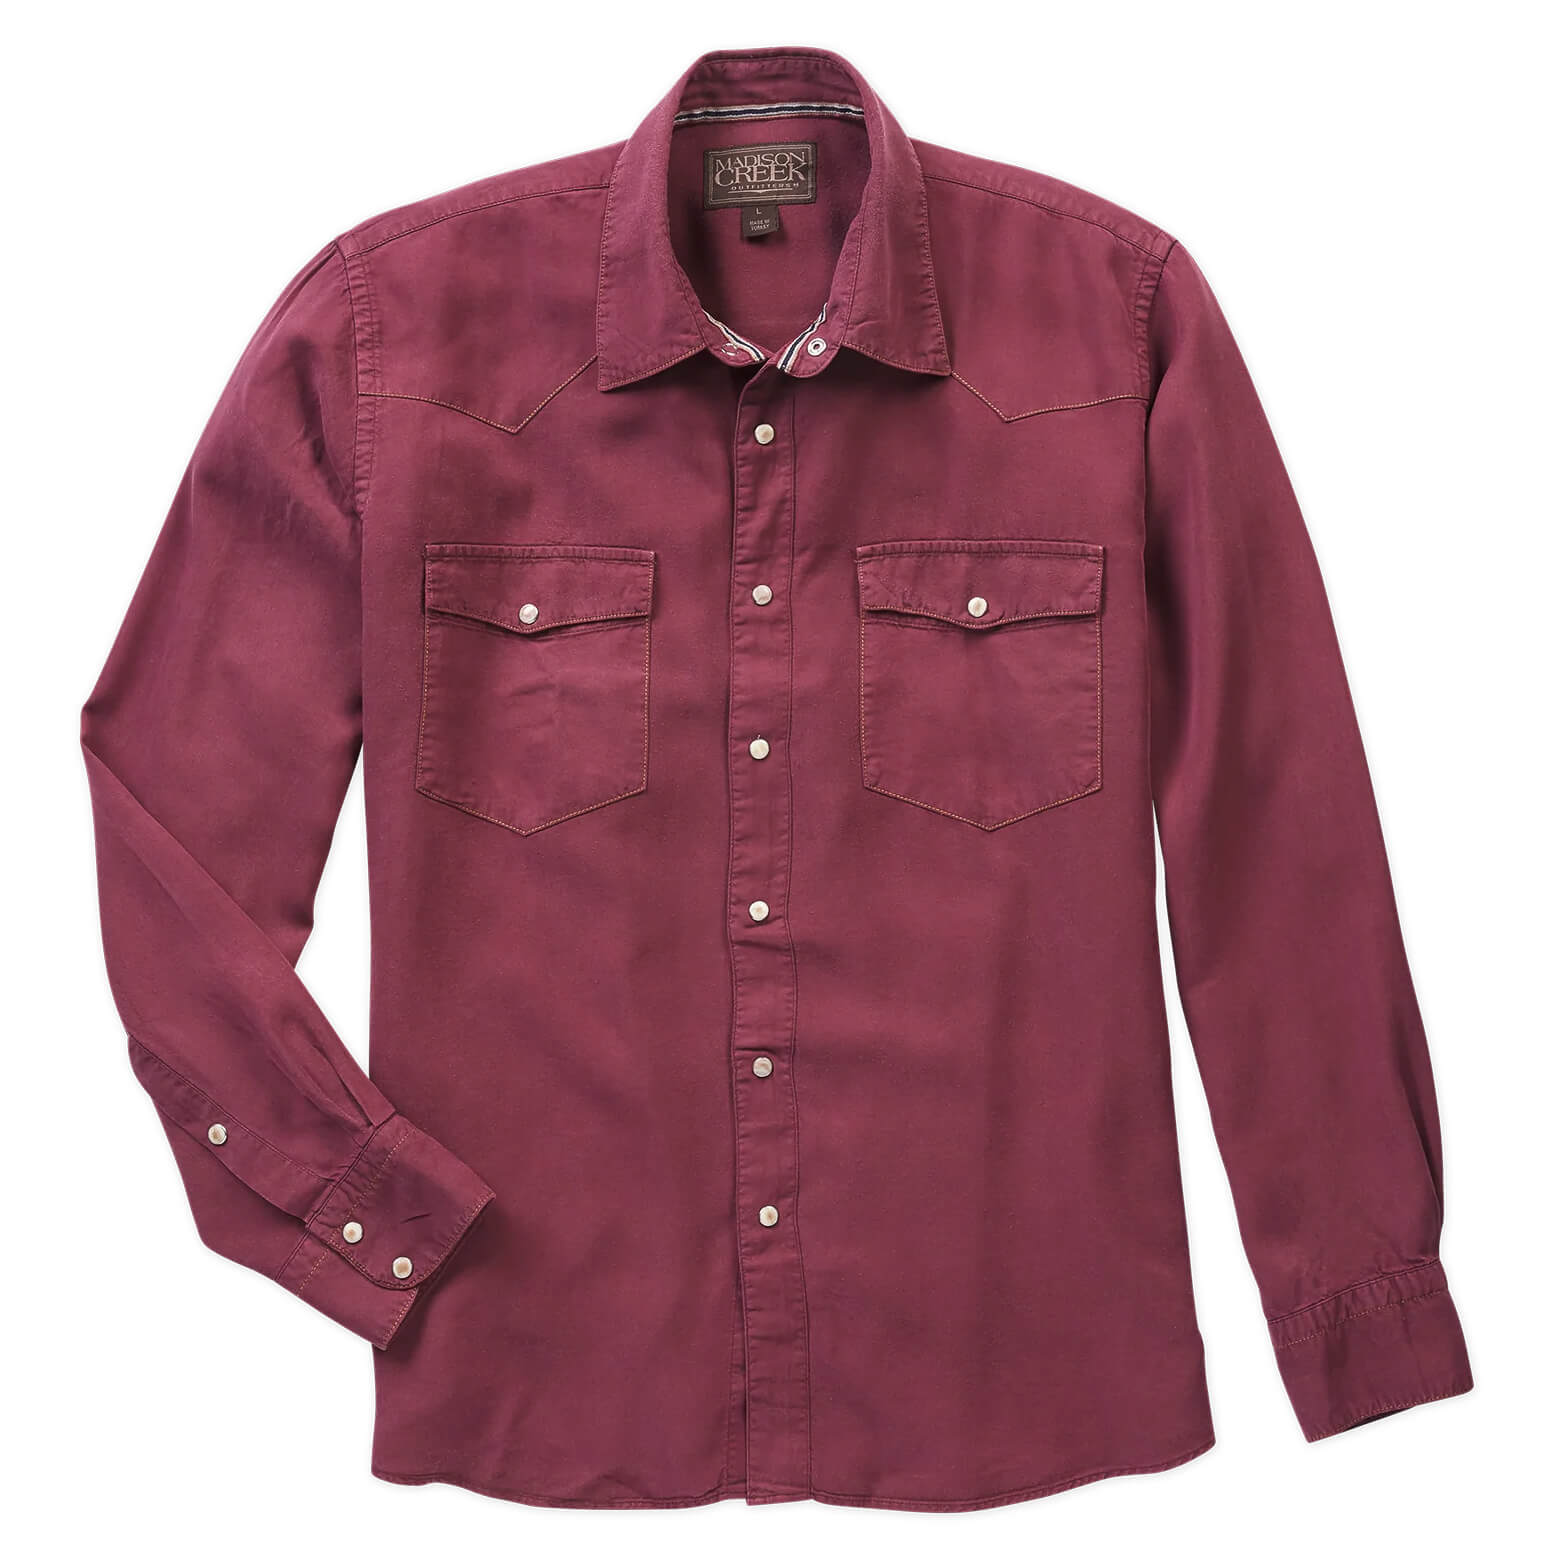 Lola Denim Western Shirt - Madison Creek Outfitters